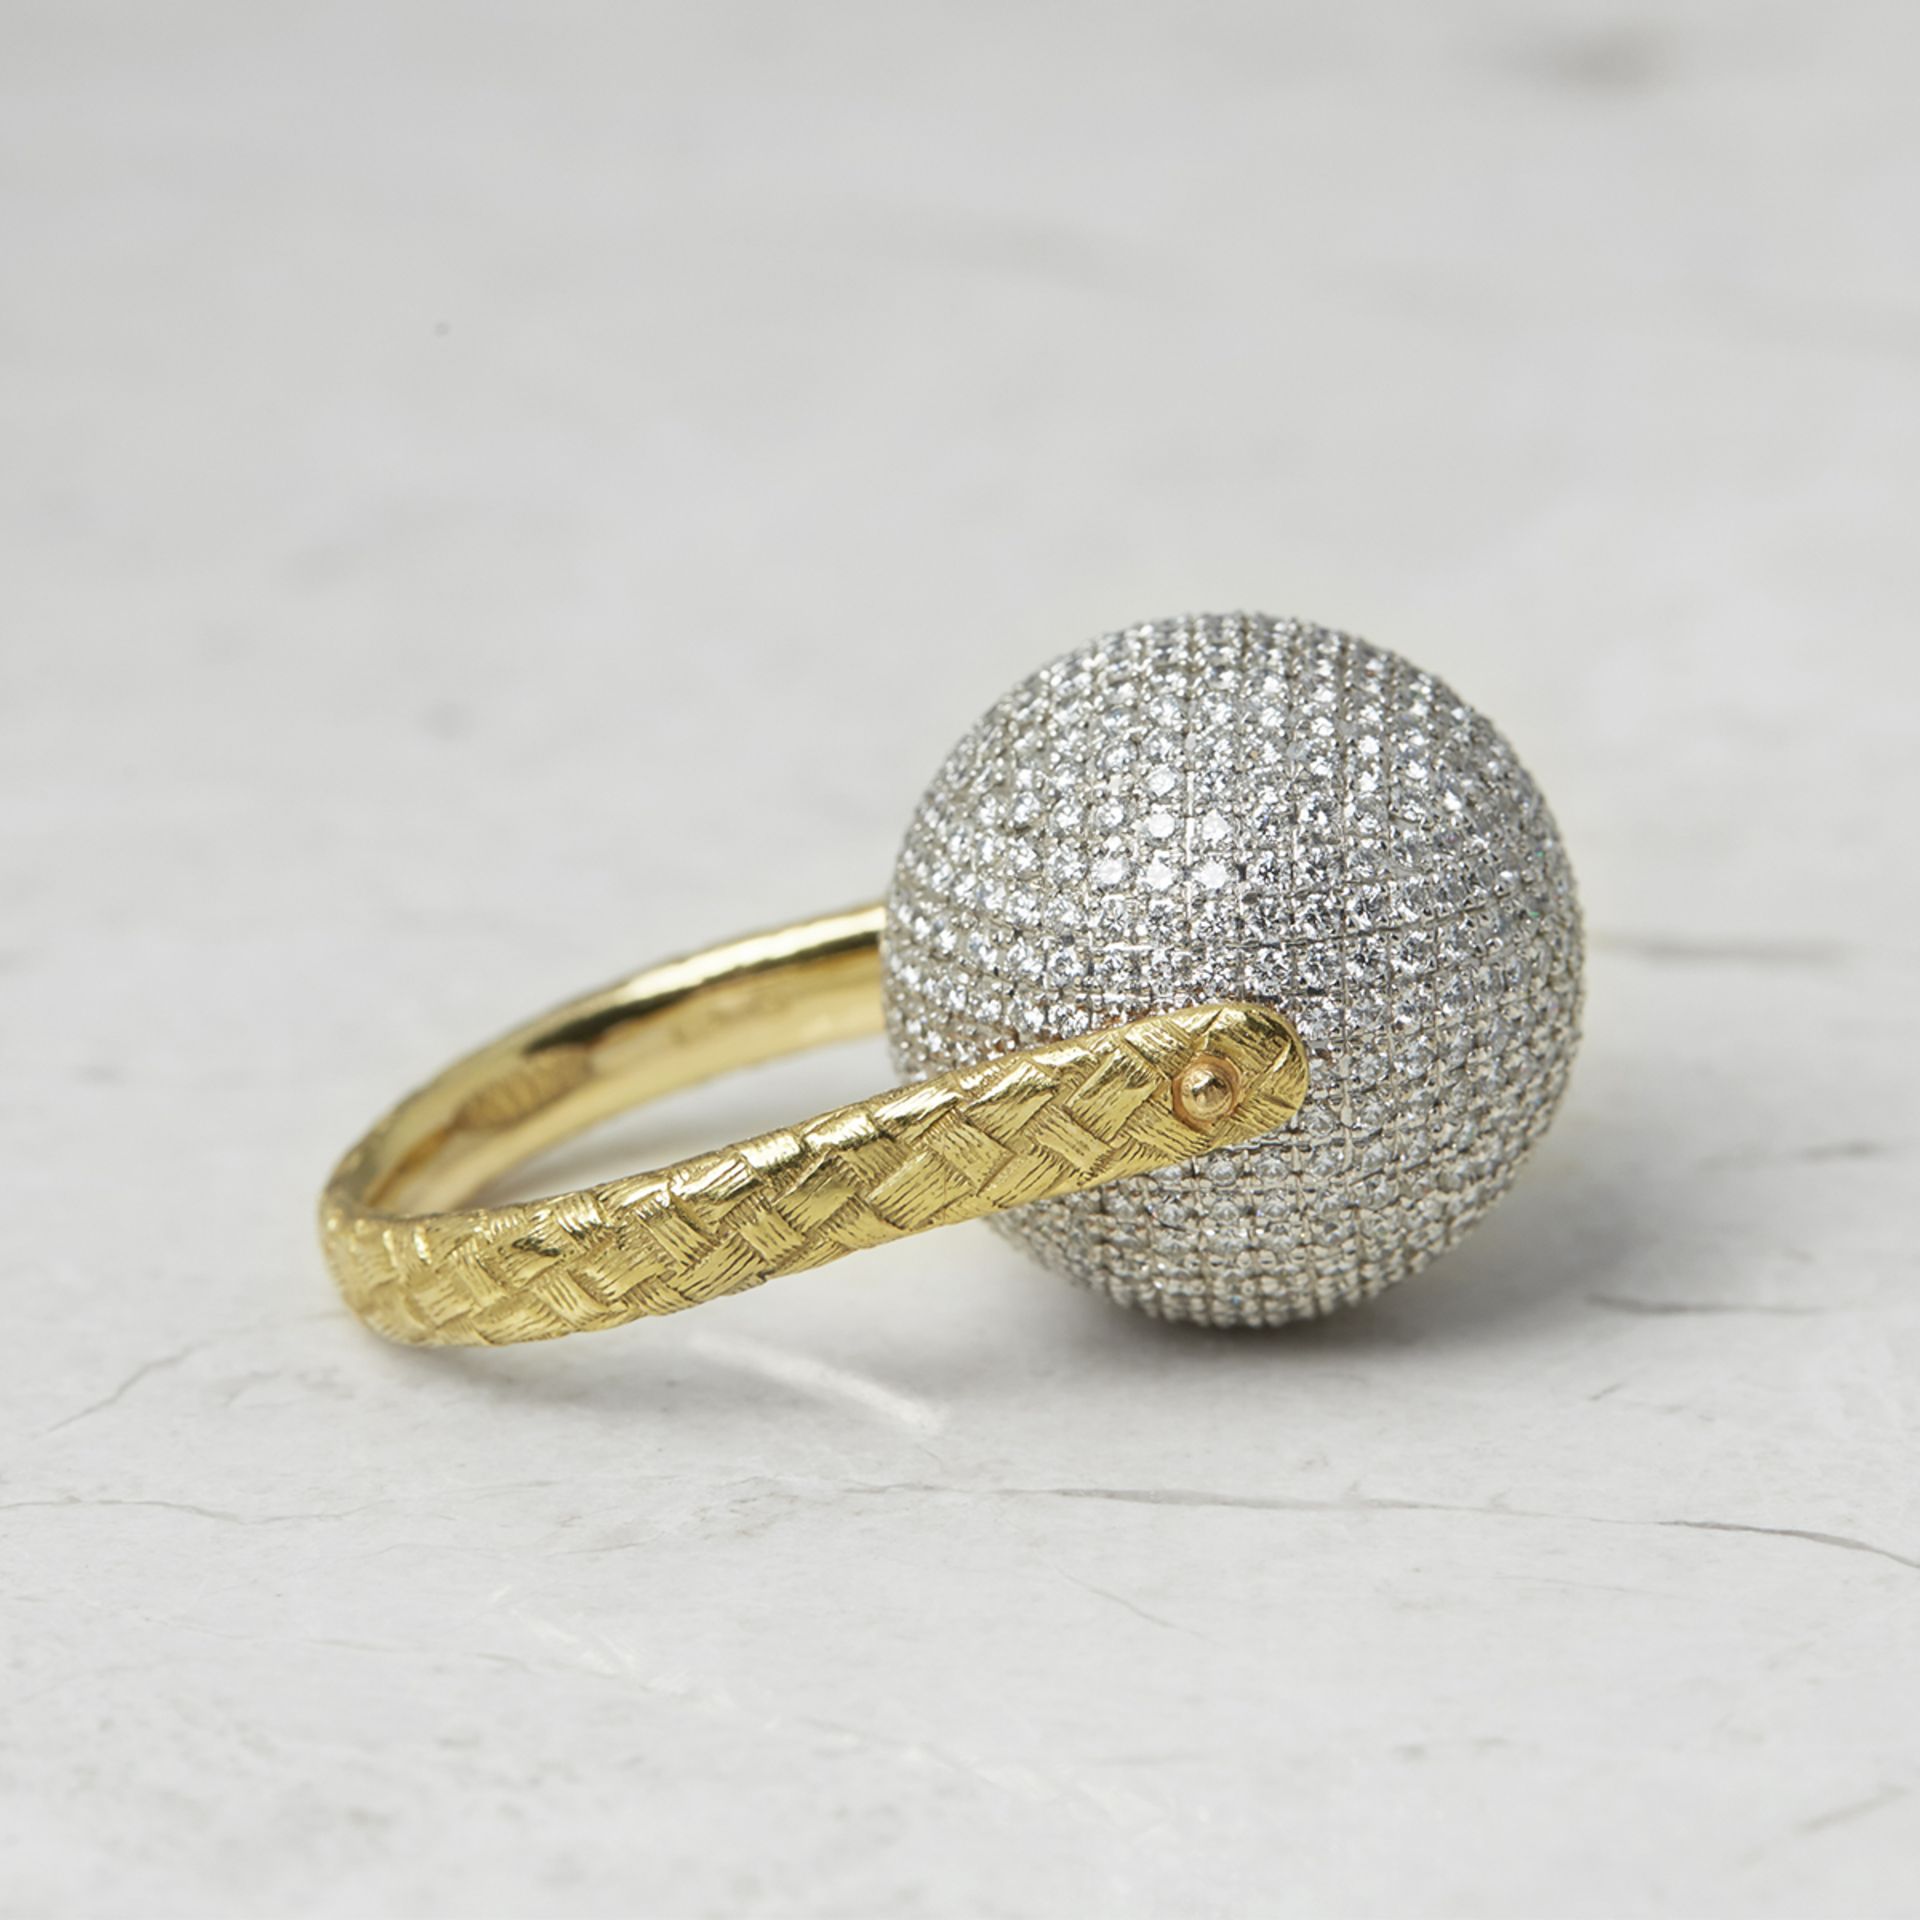 Bottega Veneta 18k Yellow & White Gold Diamond Necklace, Earrings & Ring Sfera Suite - Box & Certs - Image 4 of 21